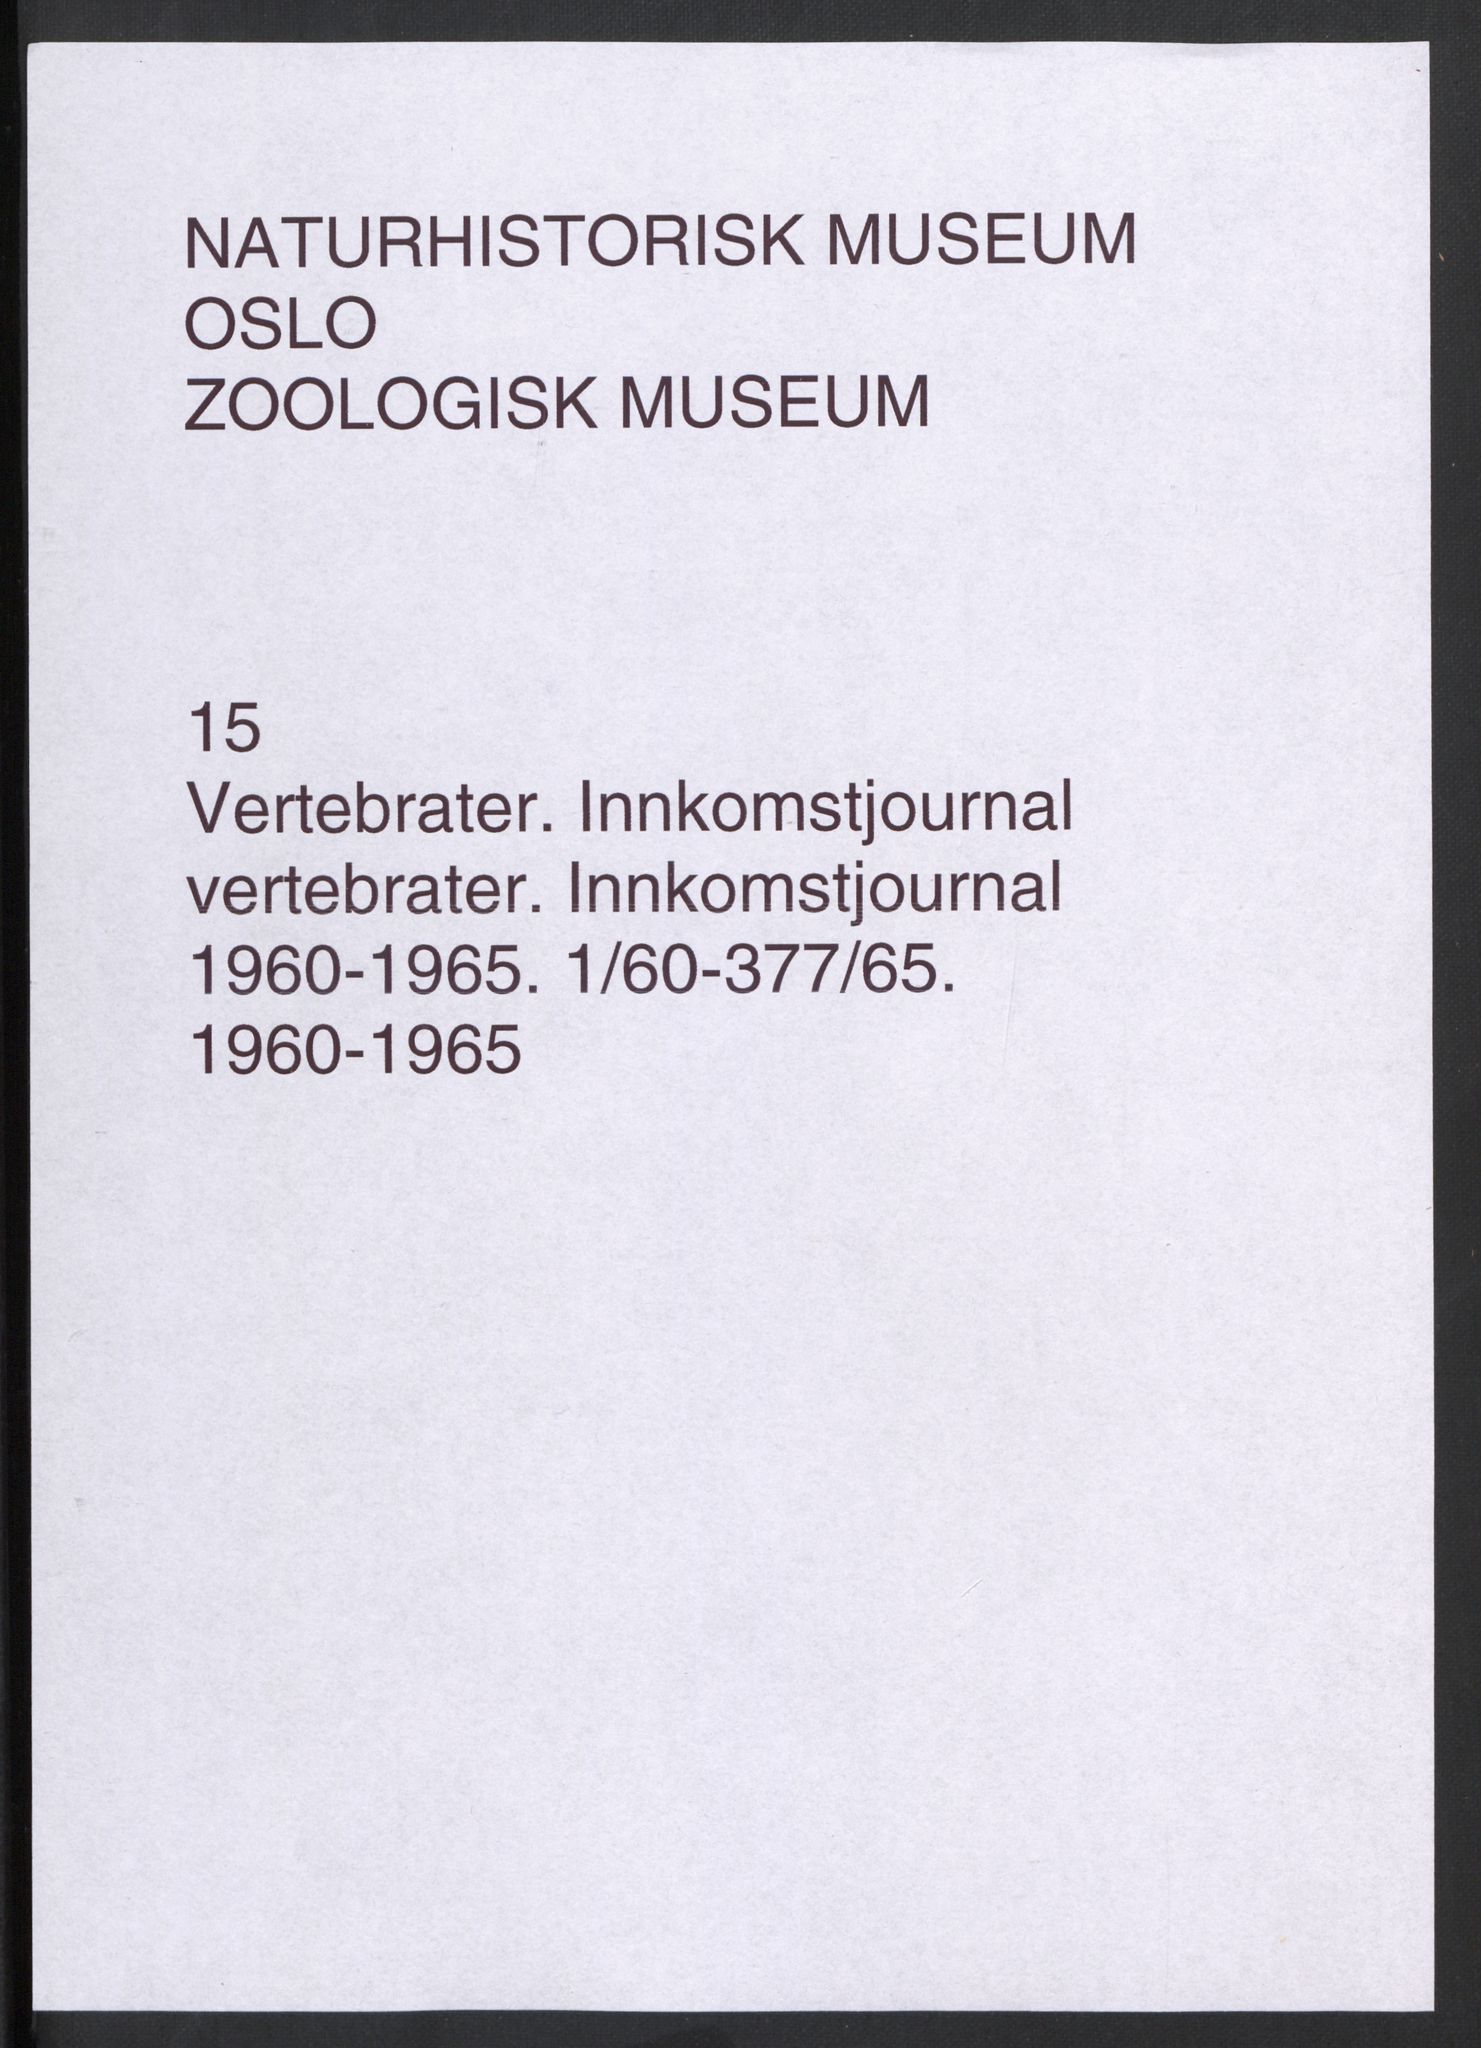 Naturhistorisk museum (Oslo), NHMO/-/5, 1960-1965